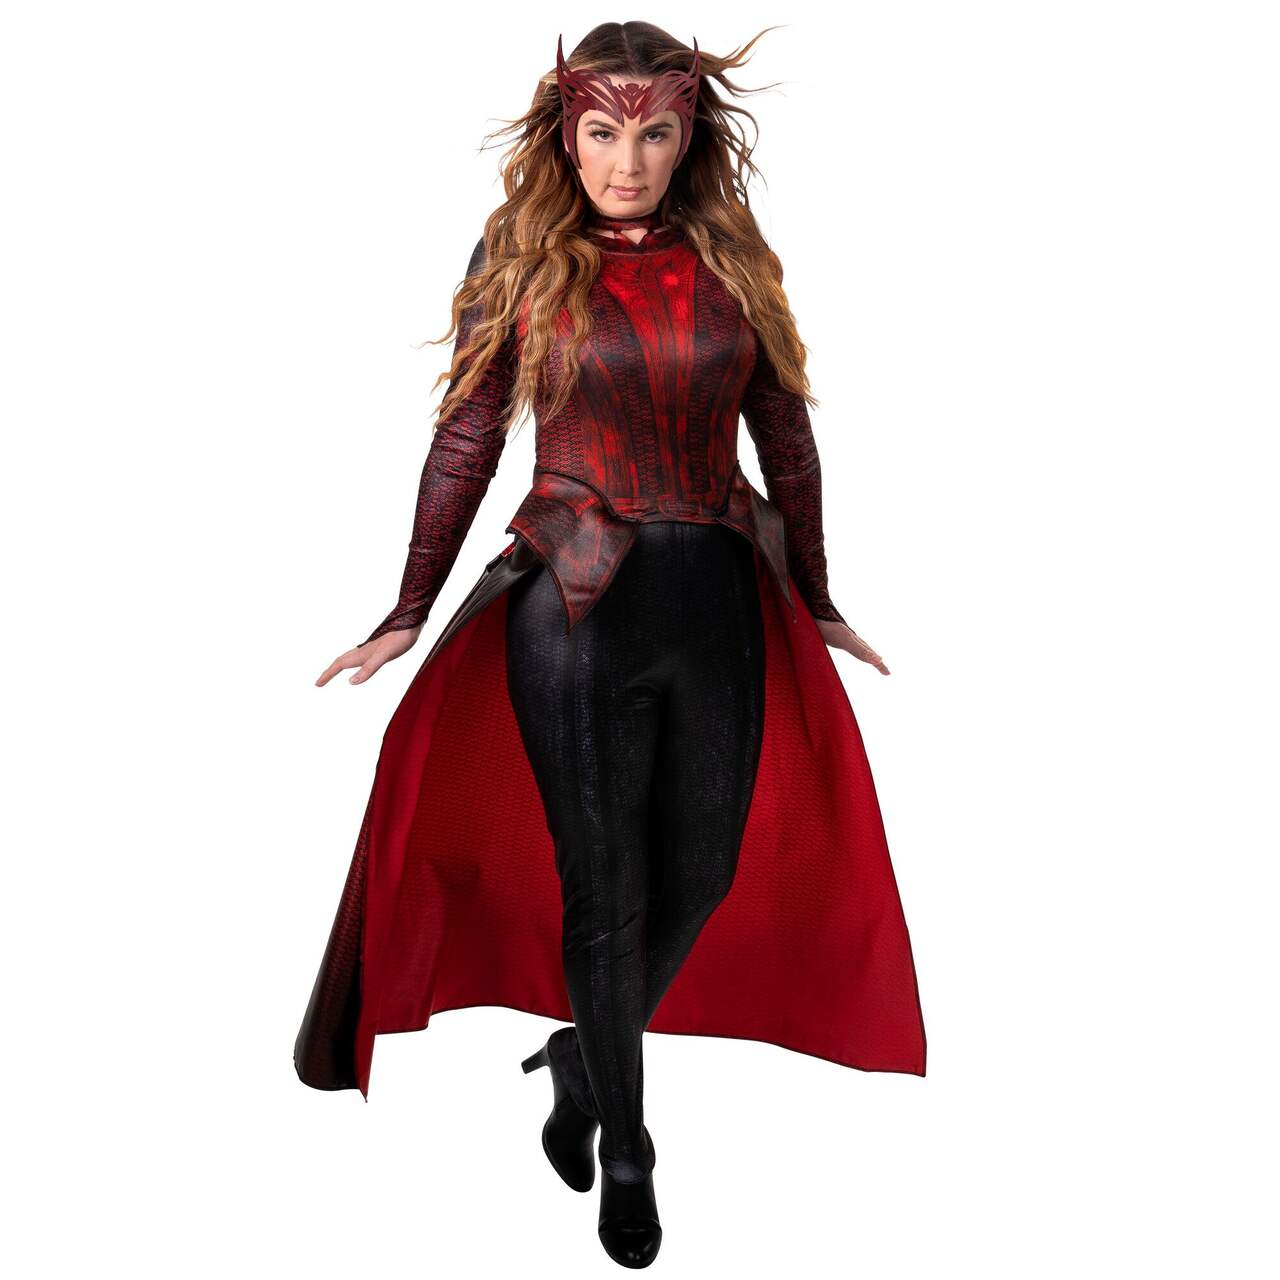 Doctor Strange 2: Scarlet Witch Ear Headbands Set Online Sale Date